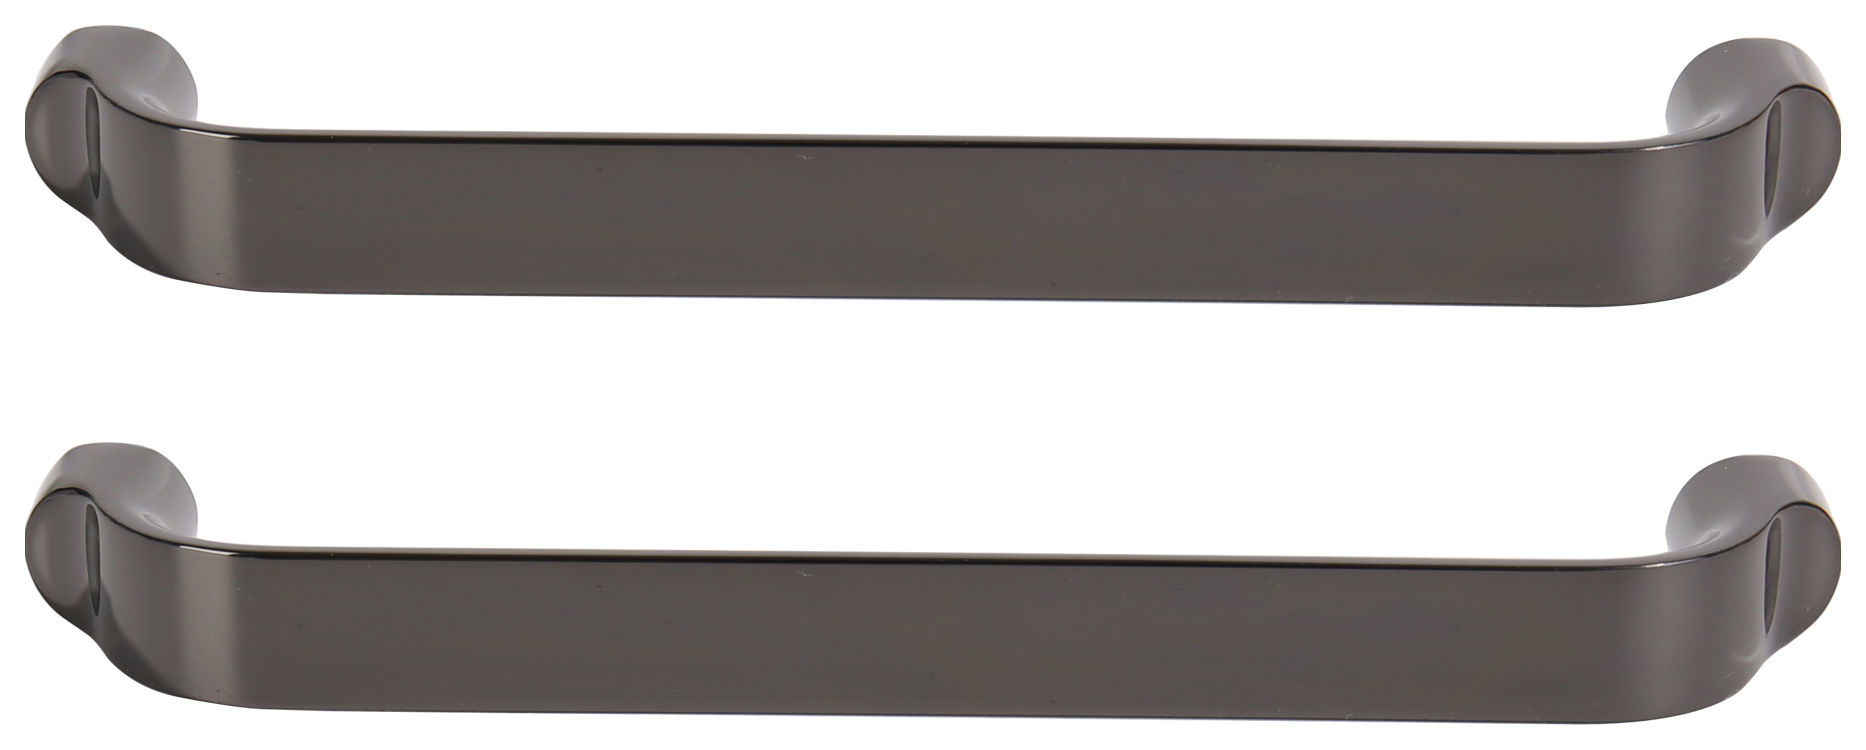 Straight Cabinet Handle Black Nickel 140mm - Pack of 2